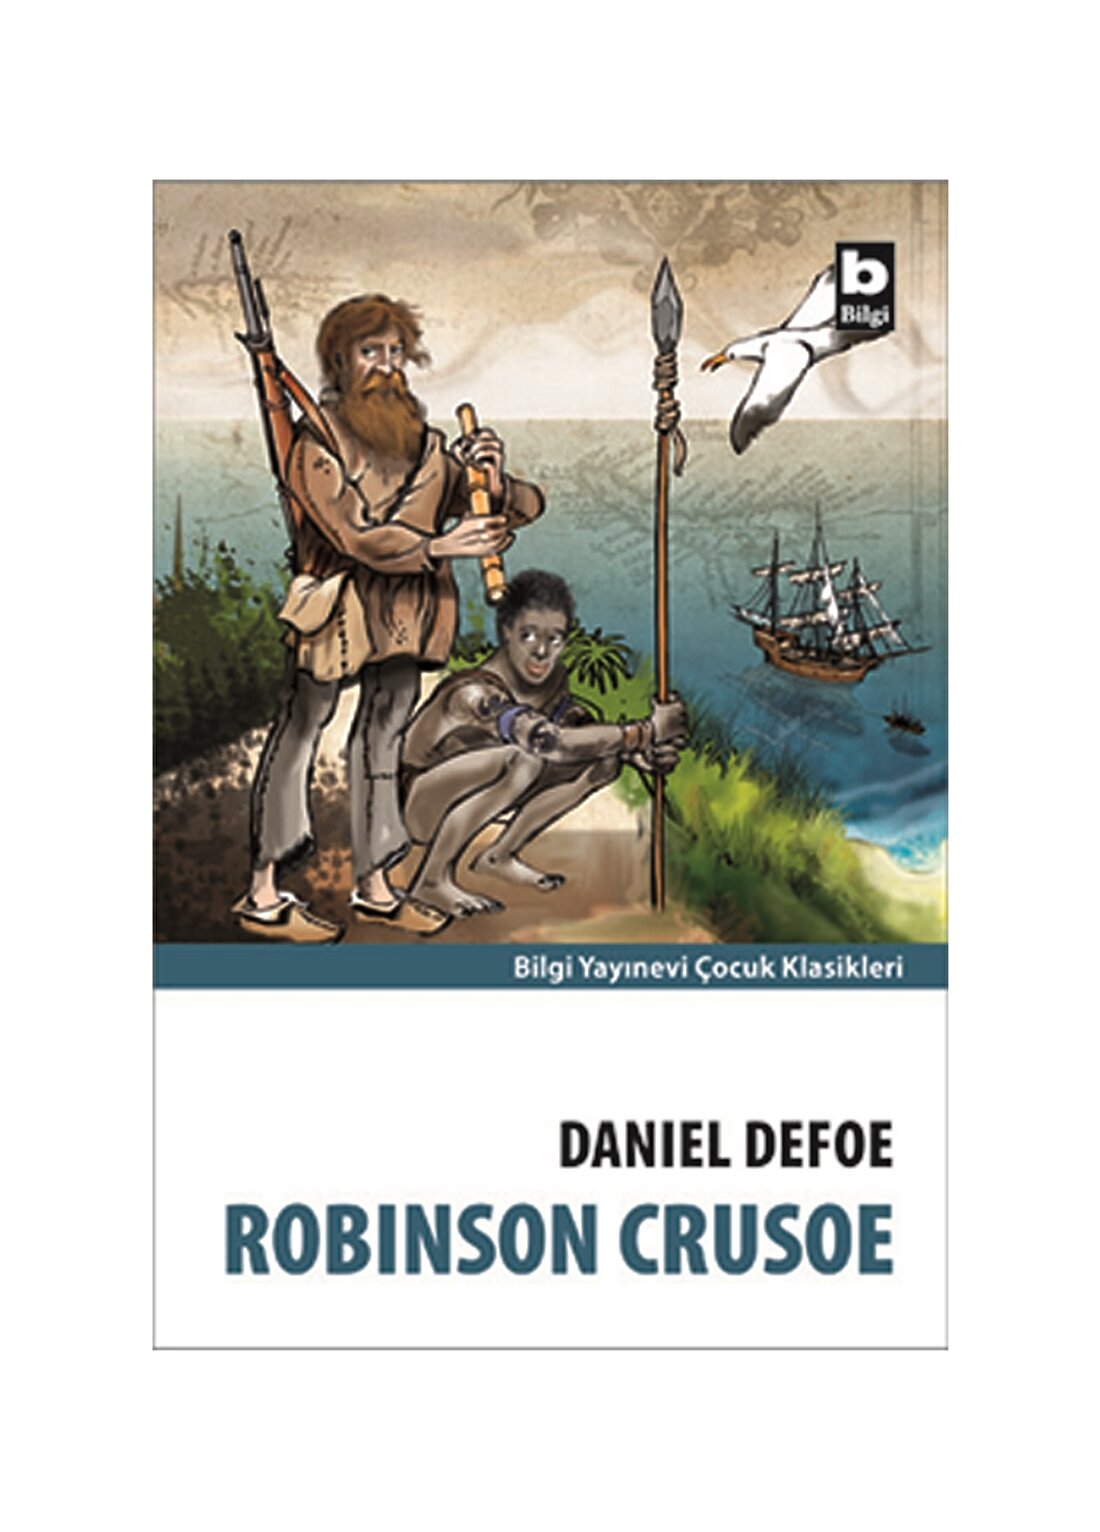 Bilgi Kitap Daniel Defoe - Robinson Crusoe